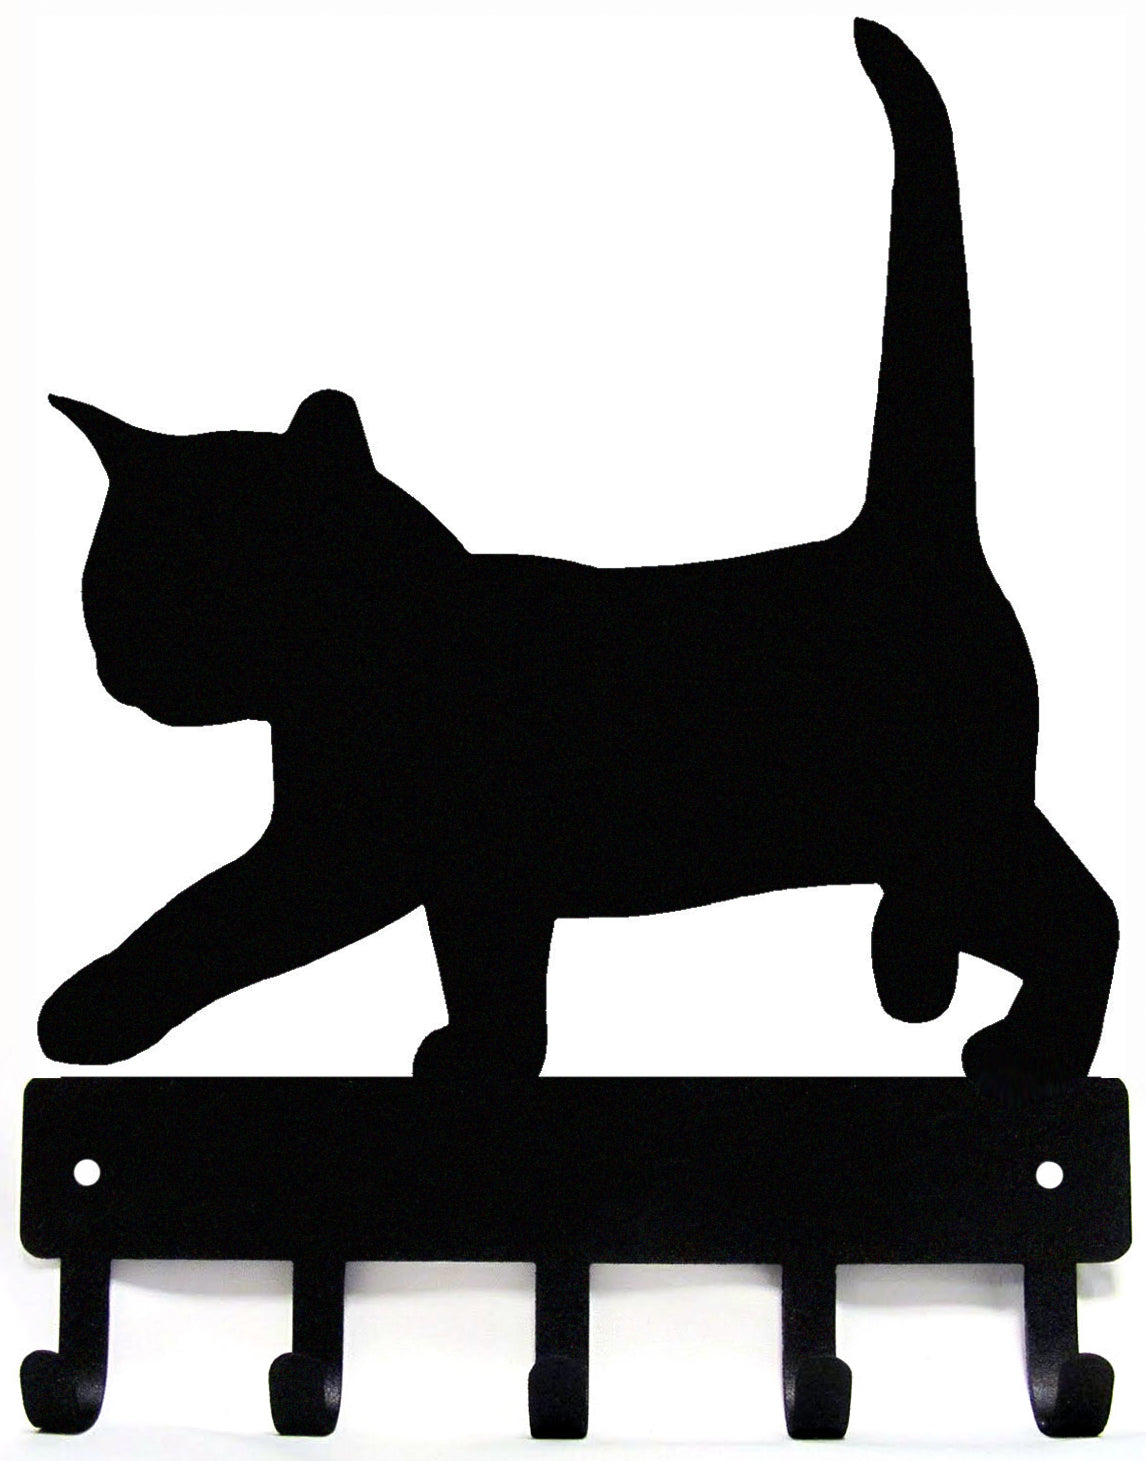 Cat #02 Key Rack with 5 hooks - The Metal Peddler Key Rack Cat, key rack